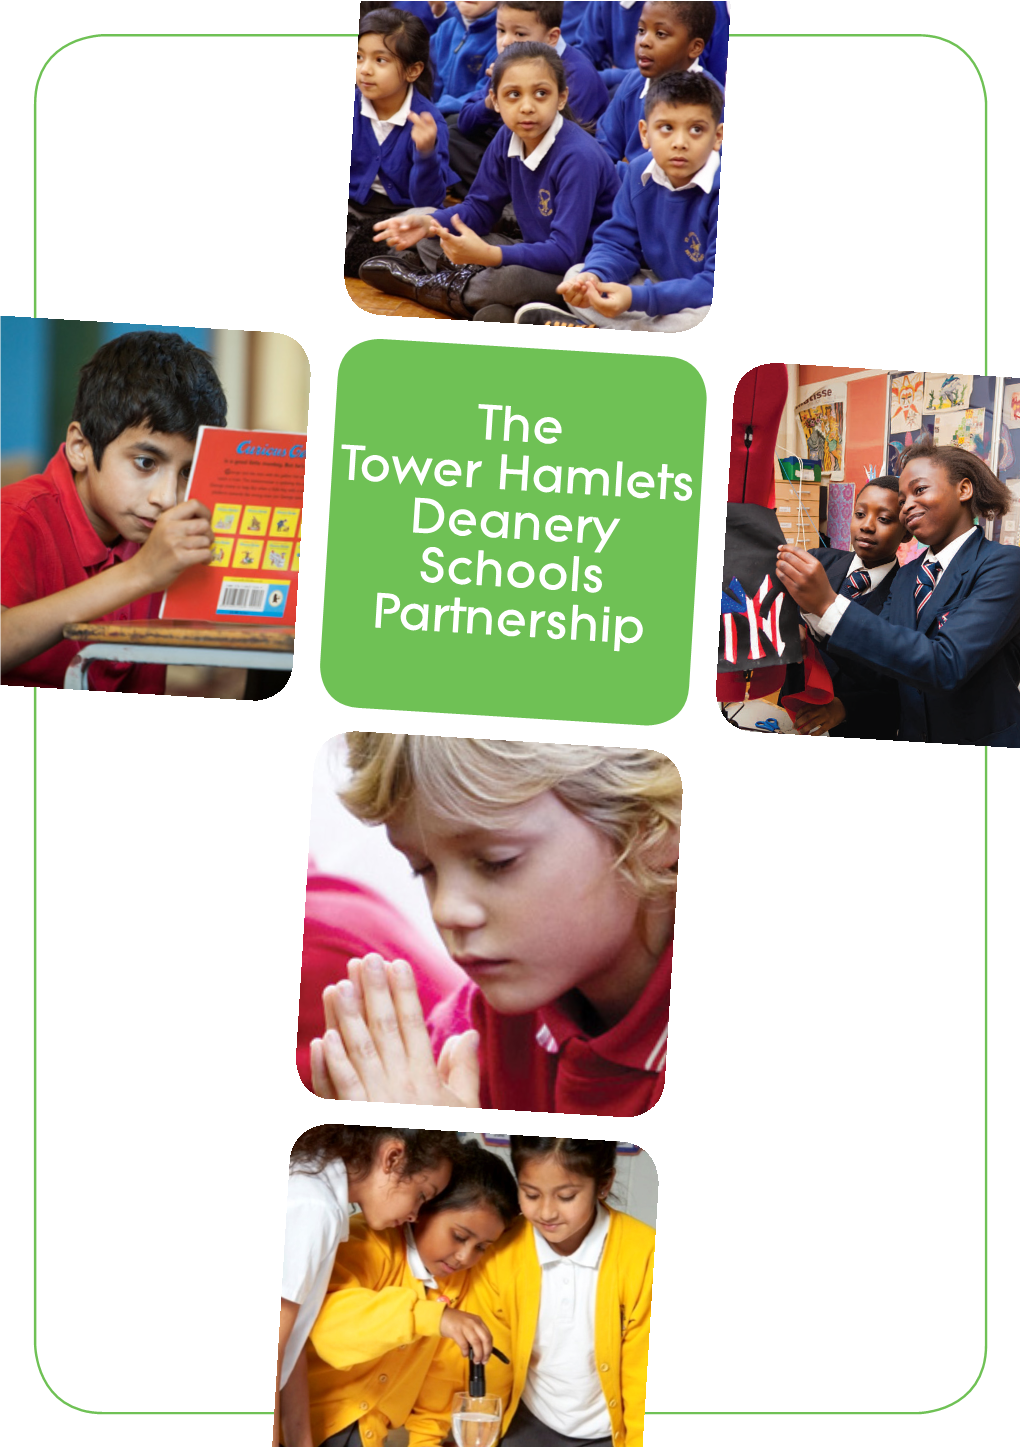 The Tower Hamlets Deanery Schools Partnership